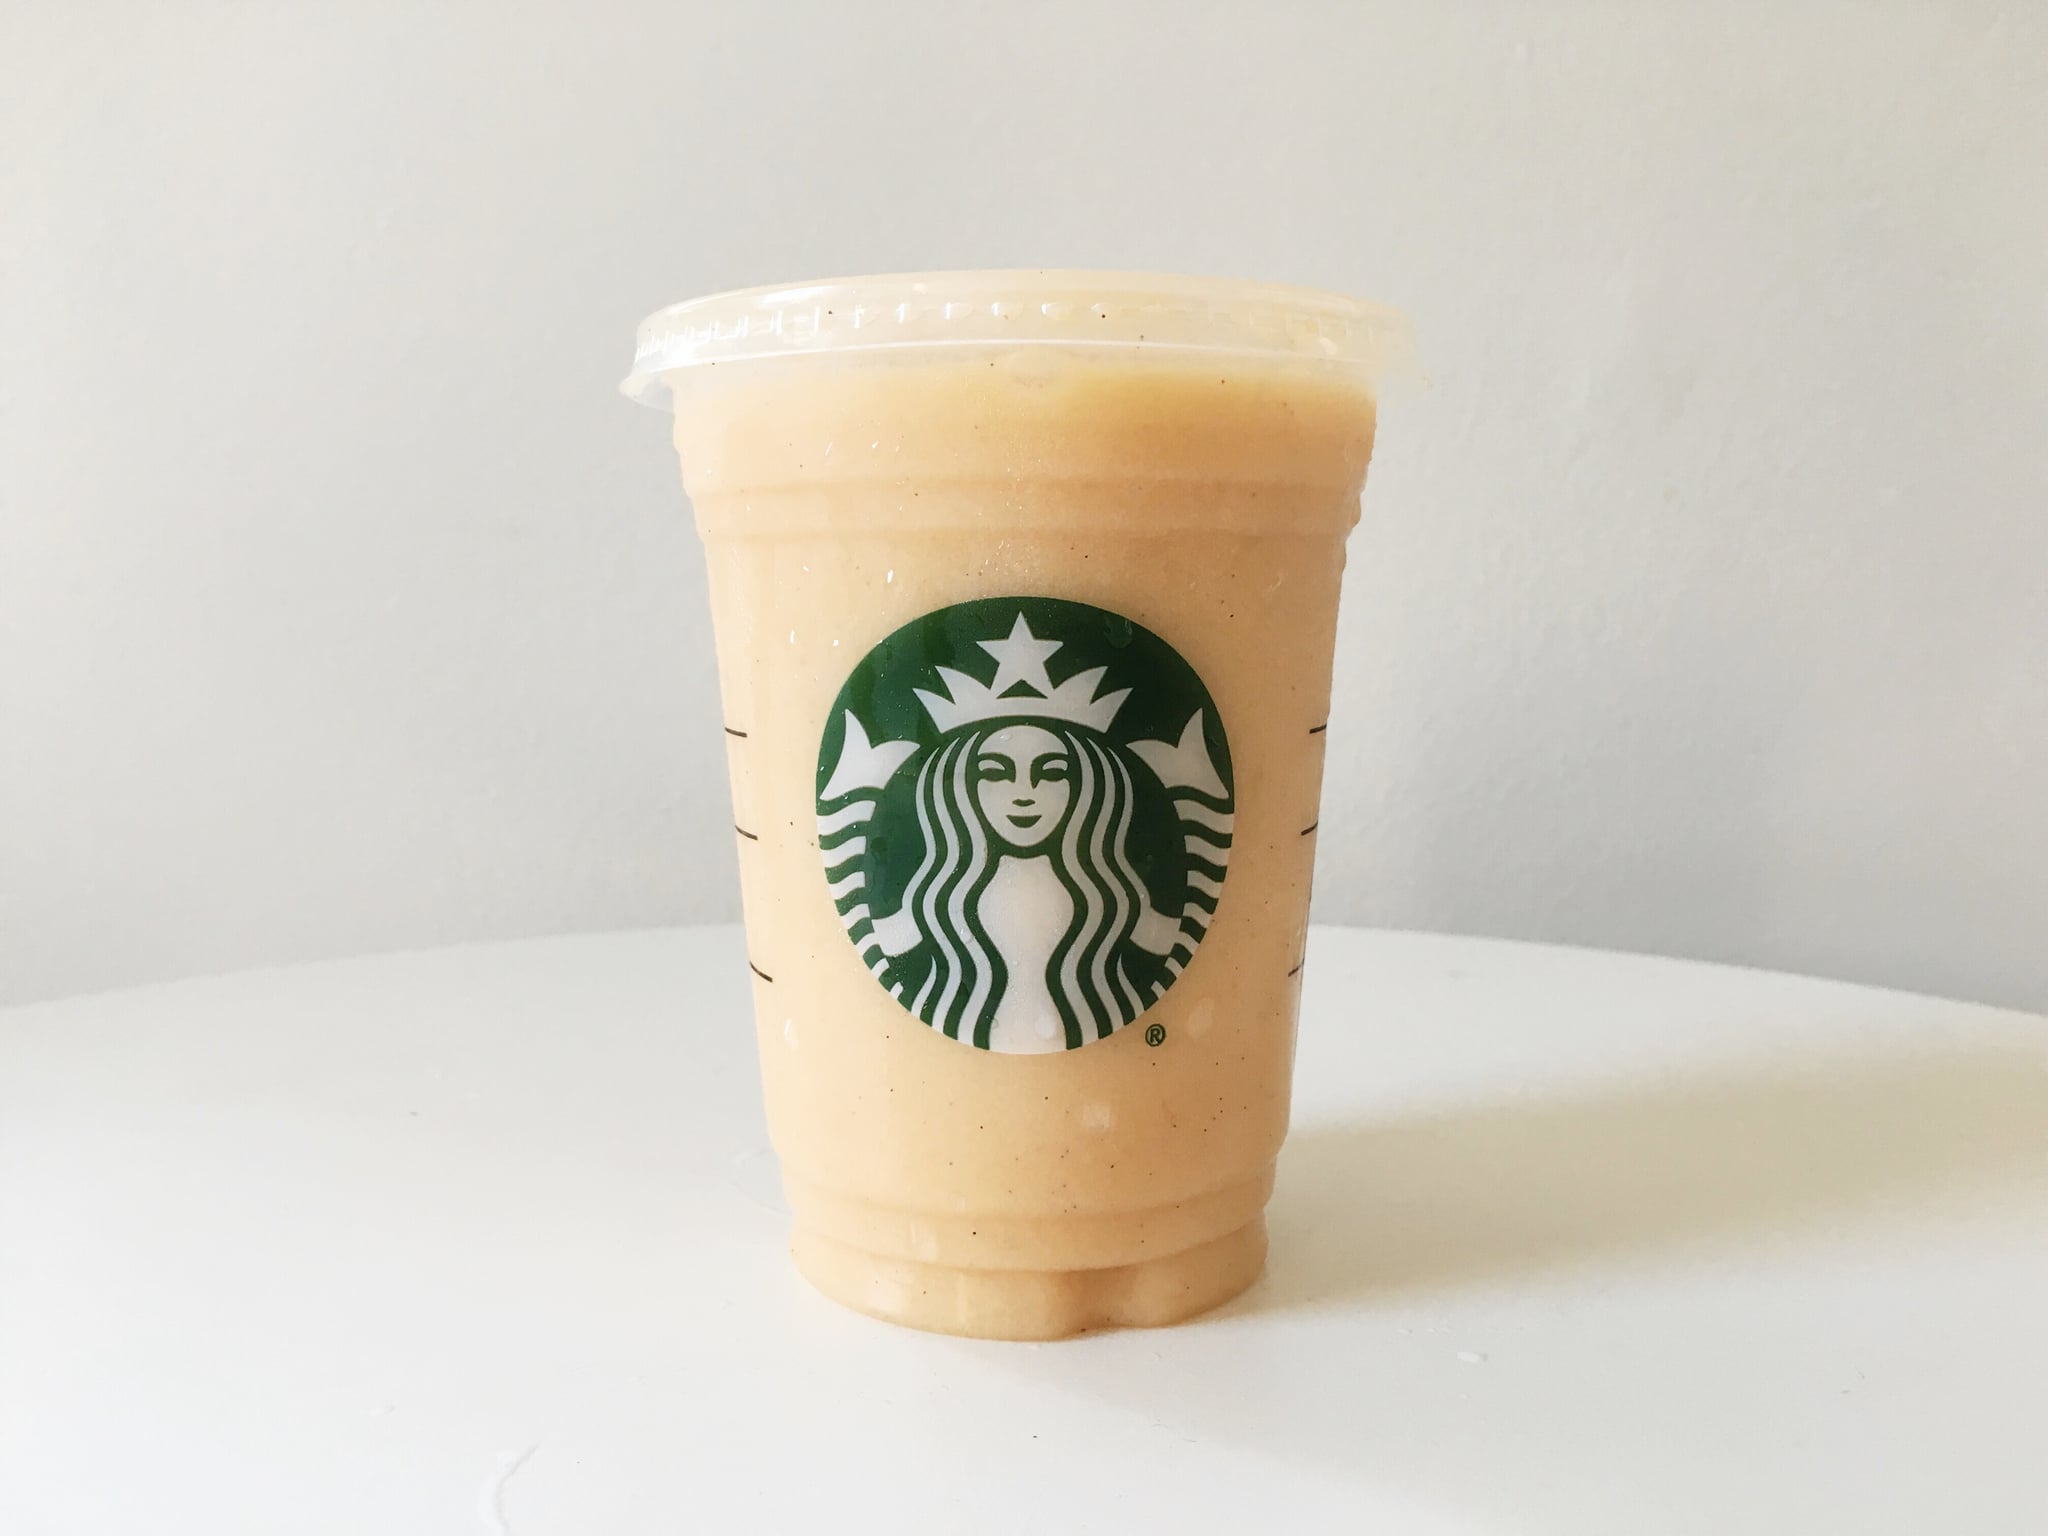 Starbucks Rainbow Drinks Review